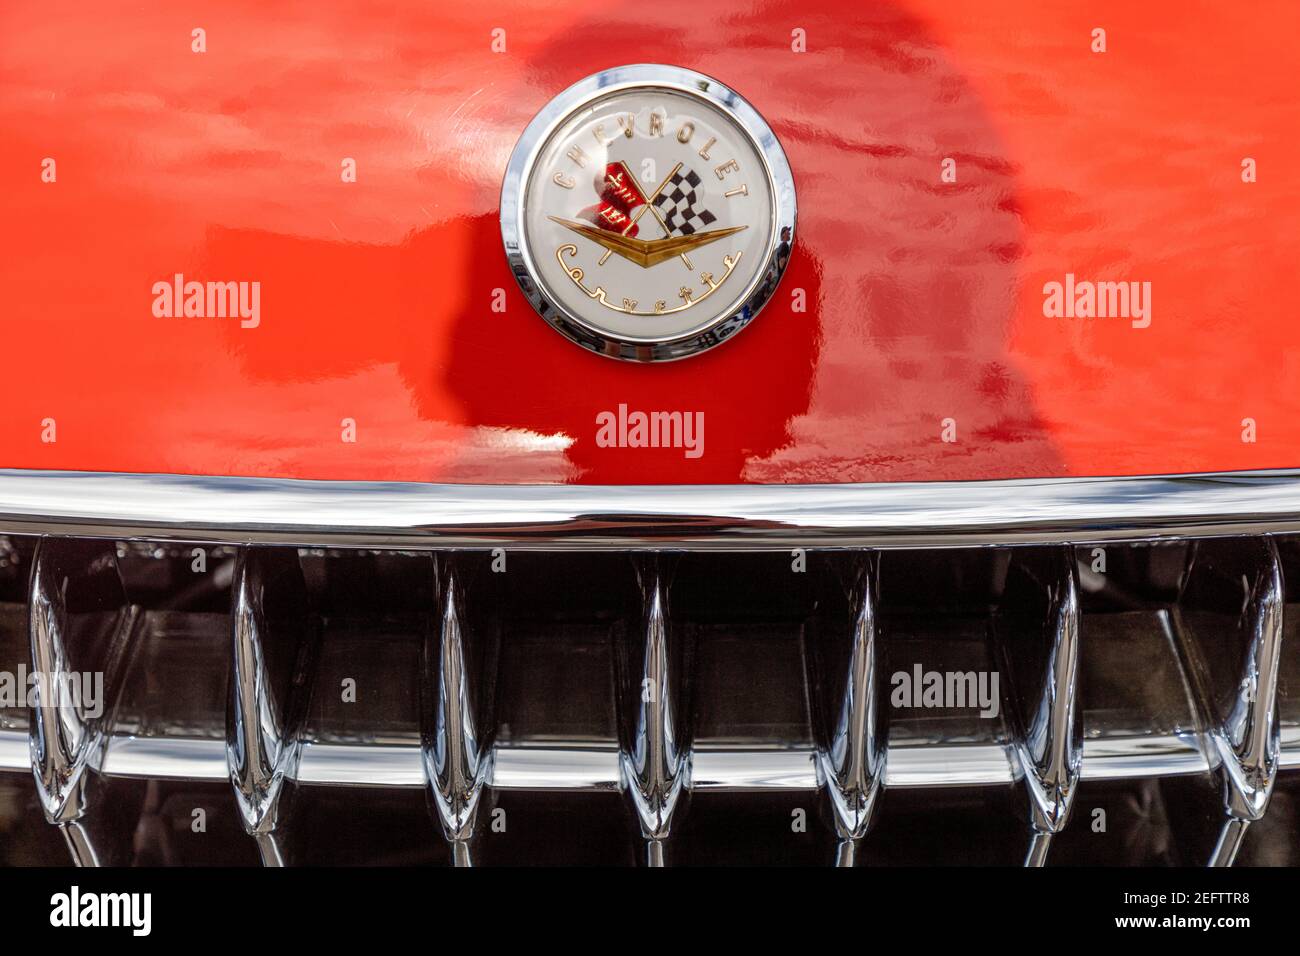 1957 orange Chevrolet Corvette hood emblem on display at 'Cars on Fifth' - Naples, Florida, USA Stock Photo